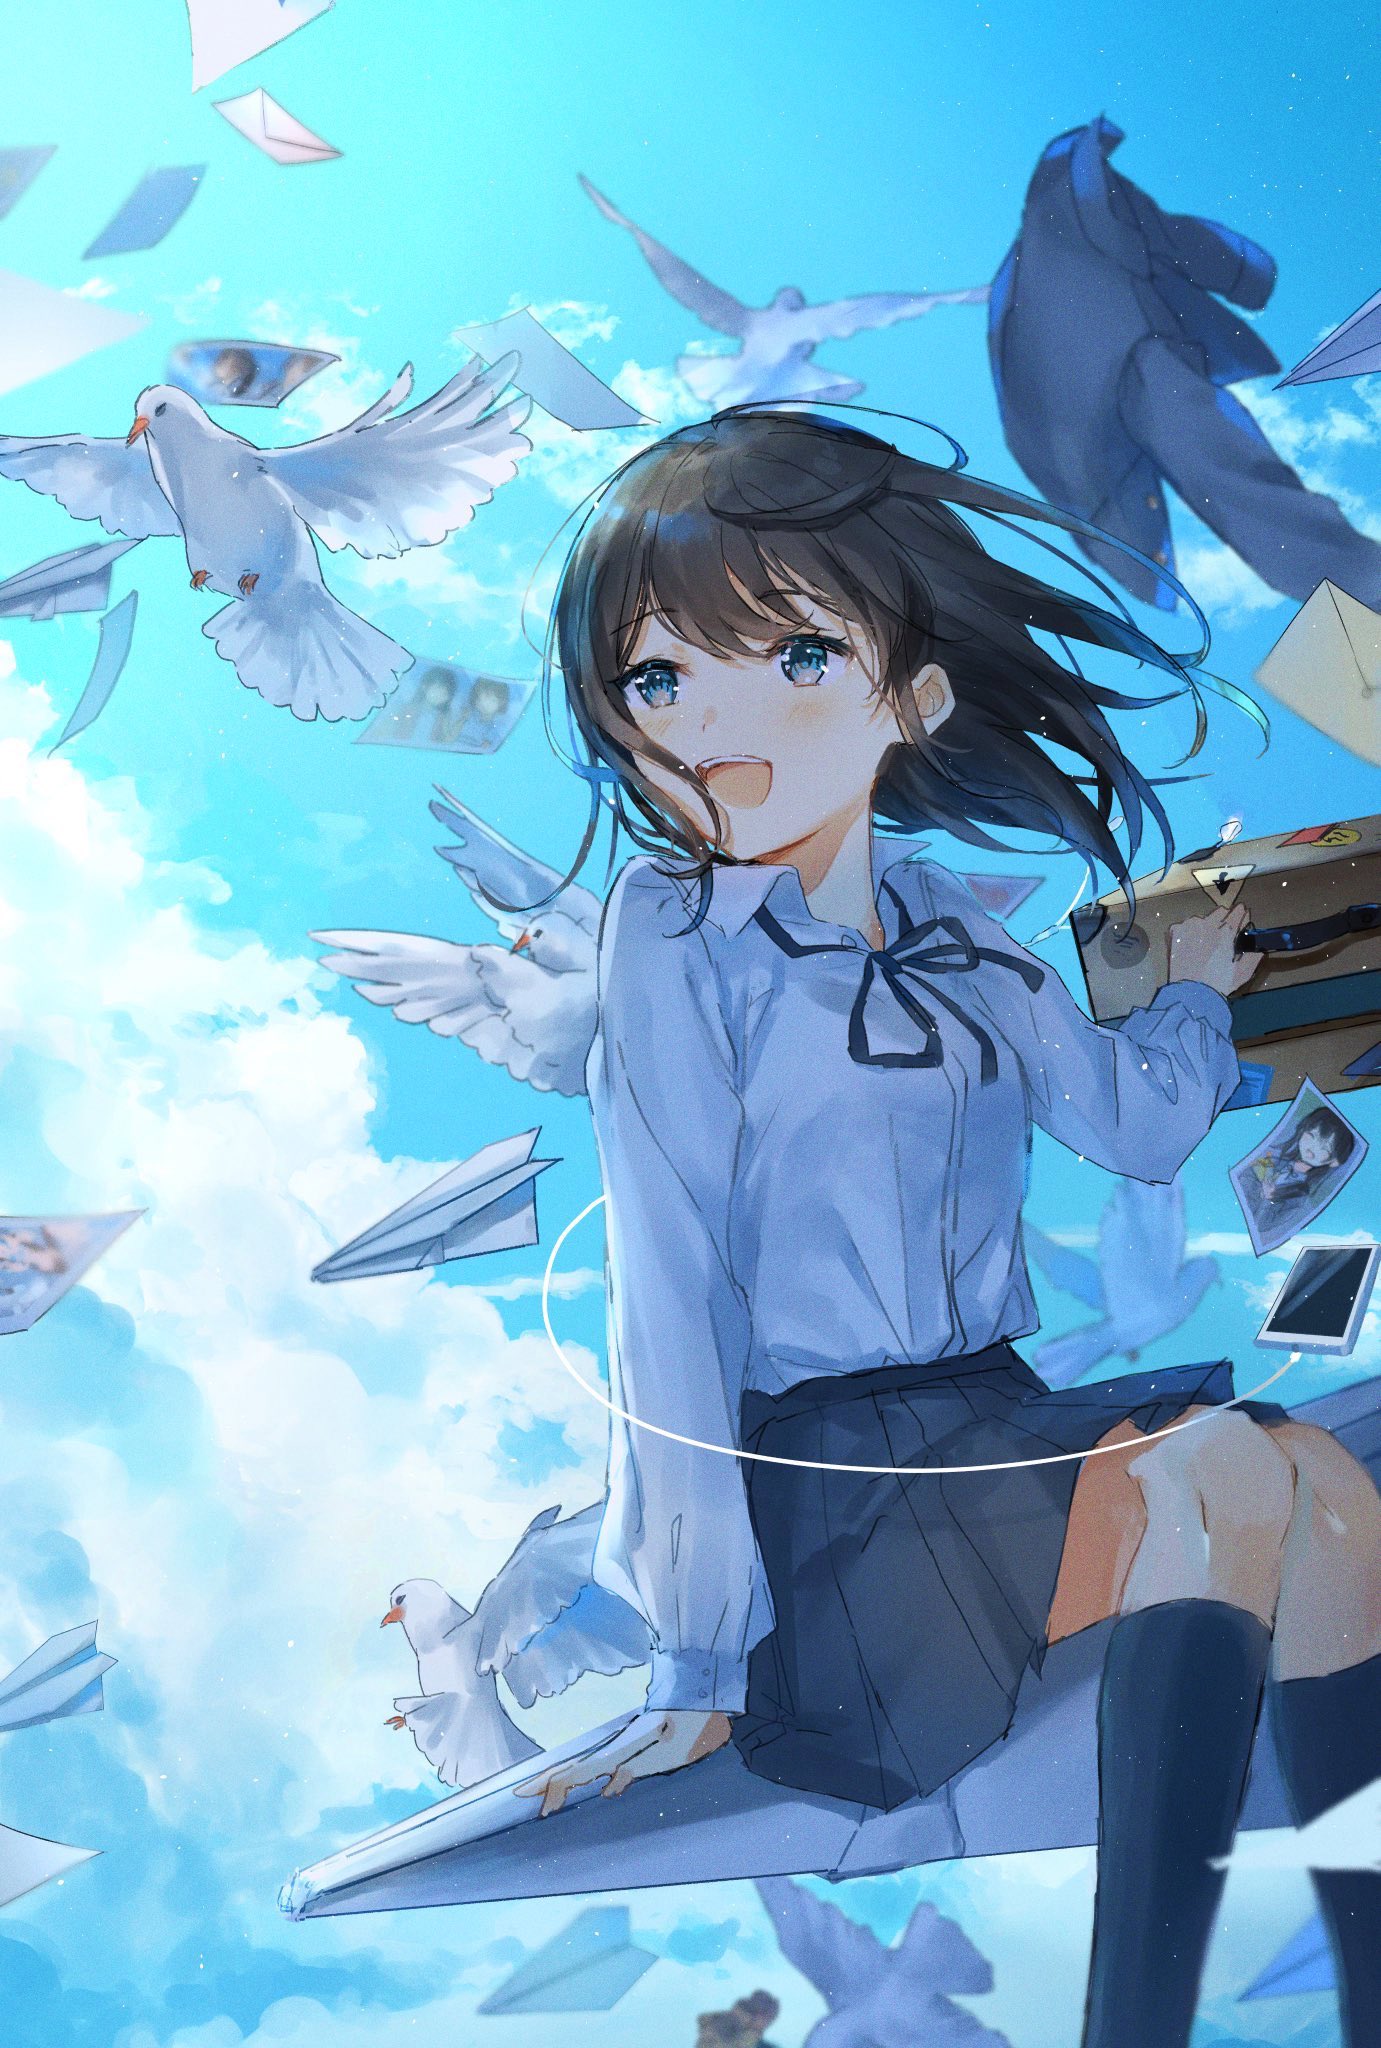 Anime 1381x2048 anime anime girls Oyuyu black hair blue eyes school uniform birds paper planes cyan